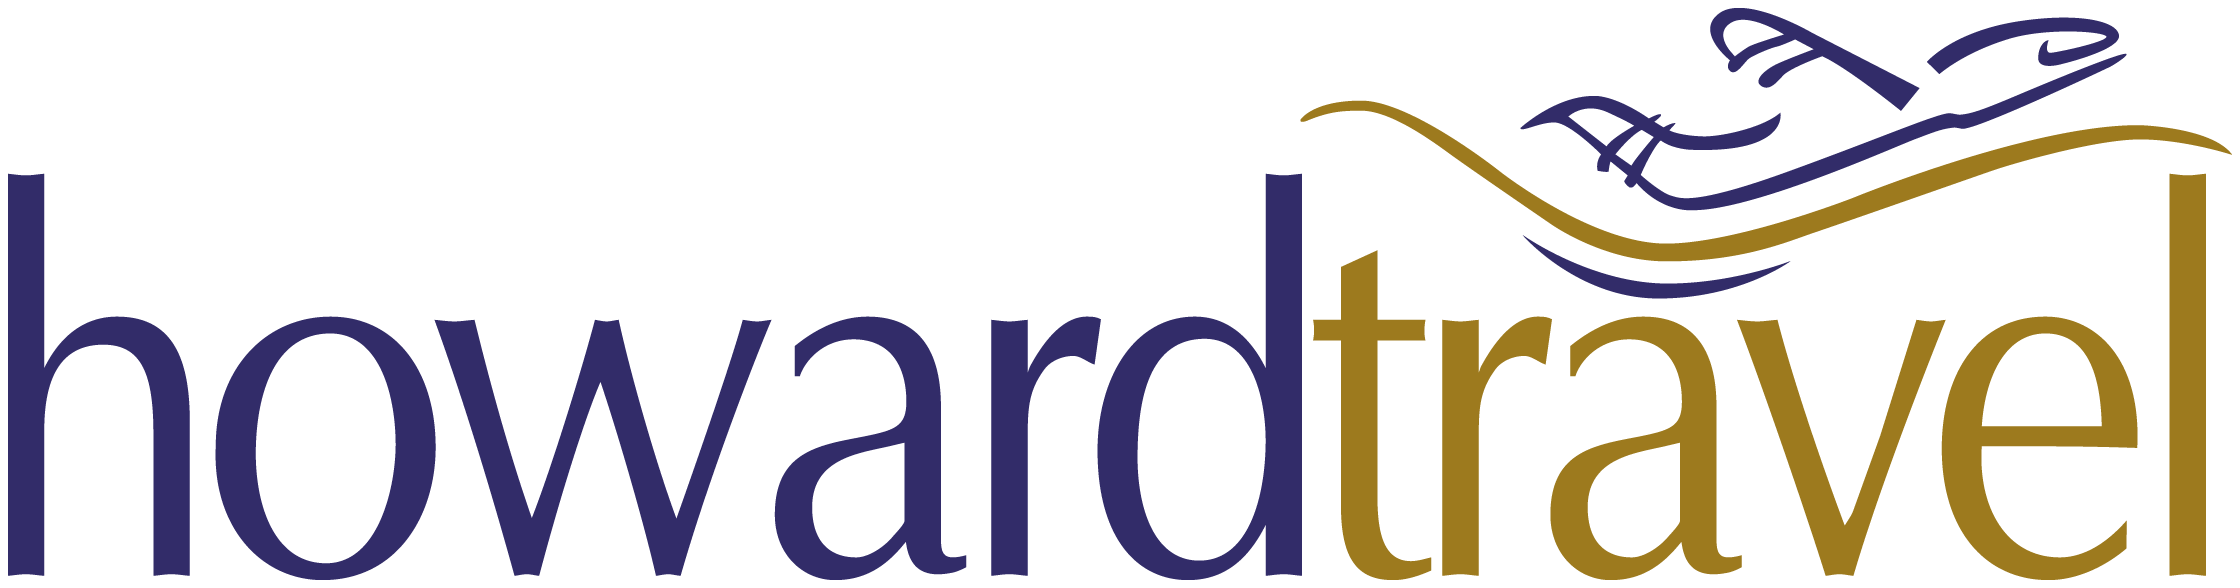 howard travel logo